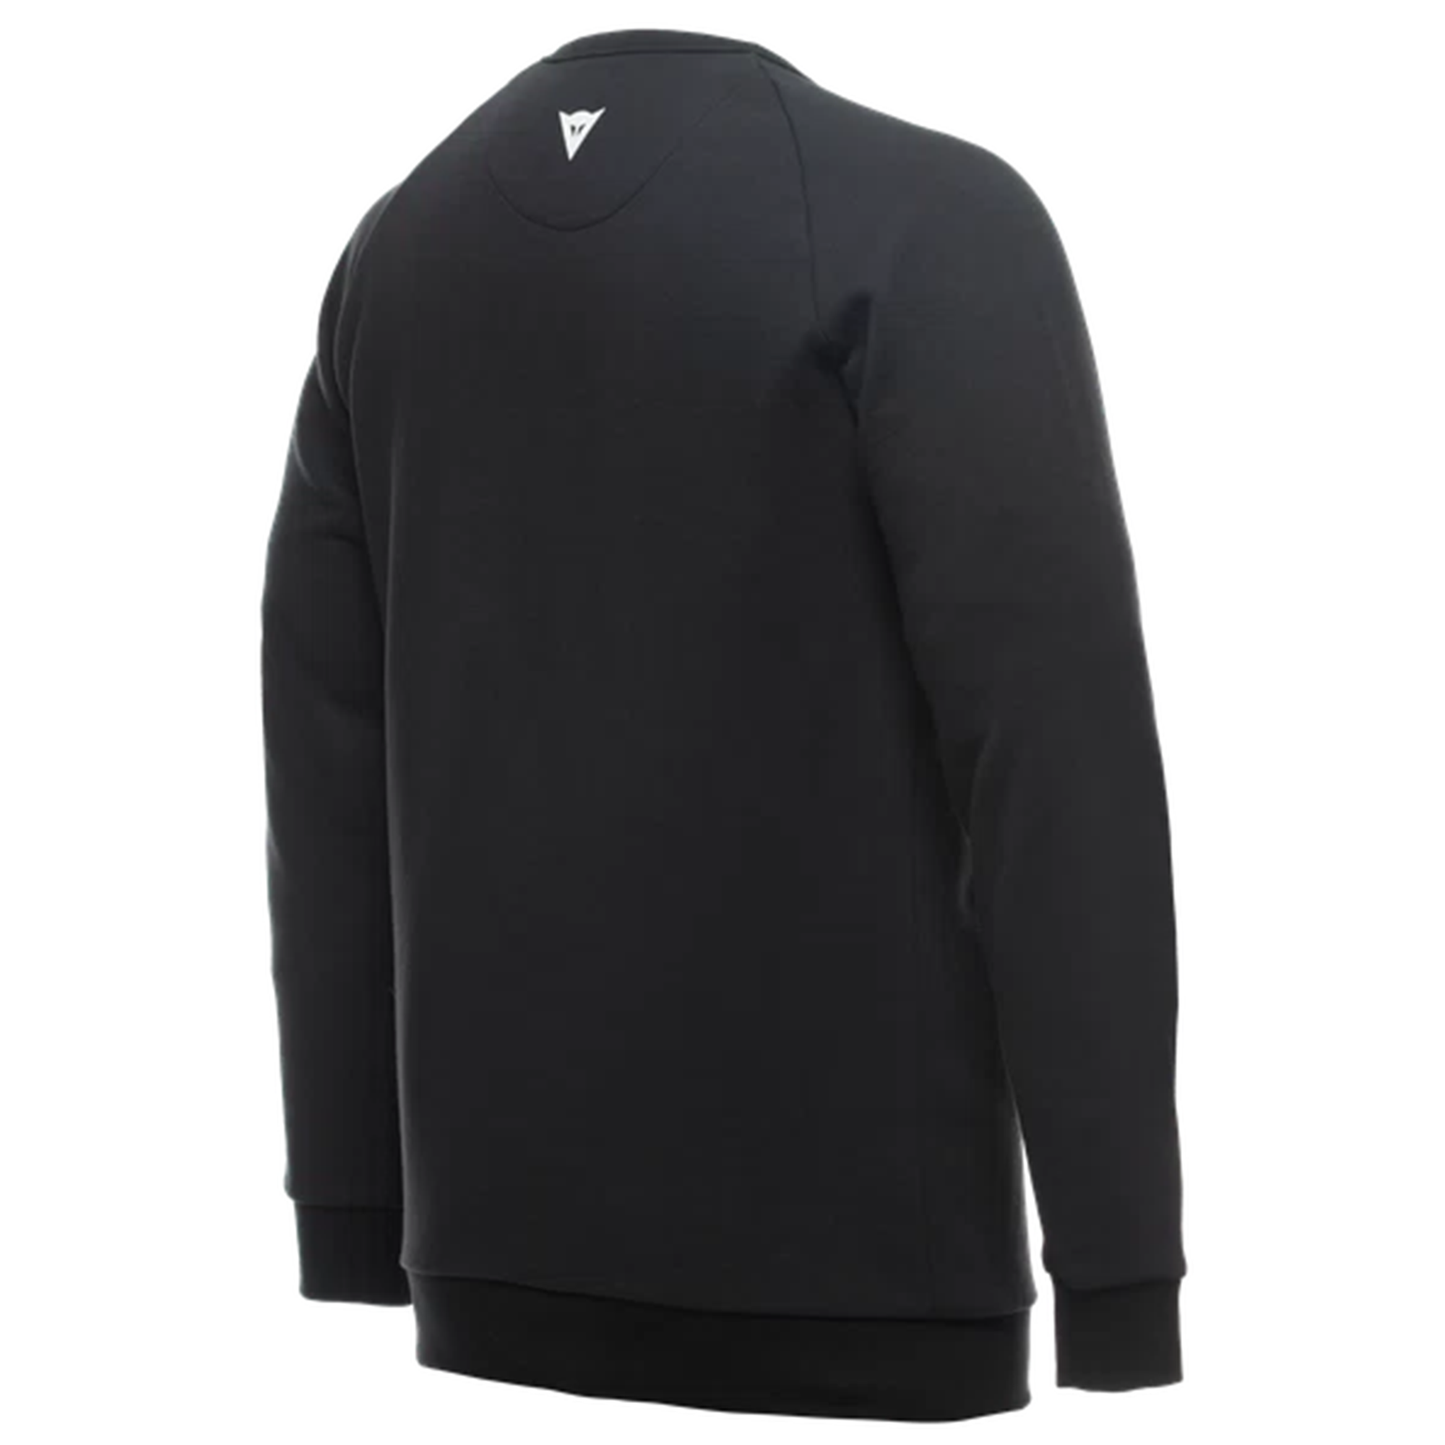 Dainese Racing Sweater Lite - 622